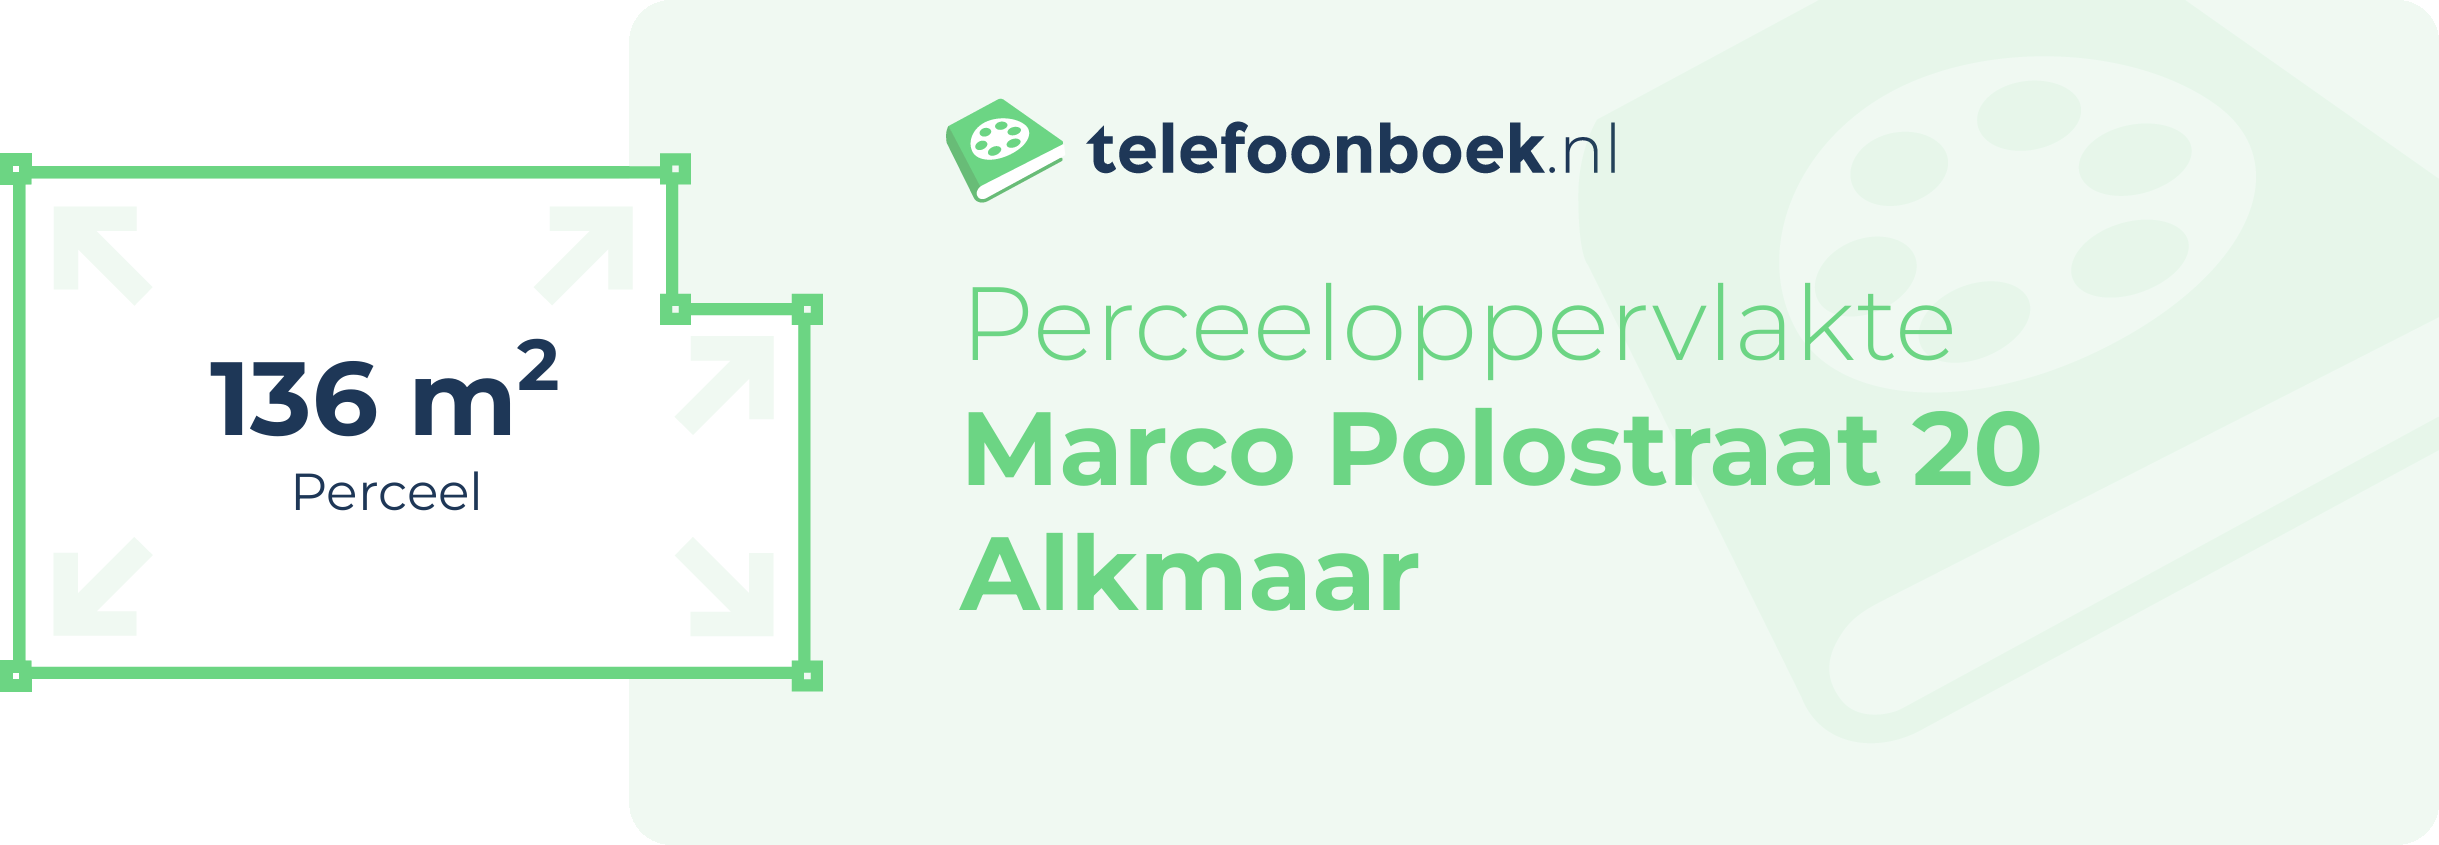 Perceeloppervlakte Marco Polostraat 20 Alkmaar